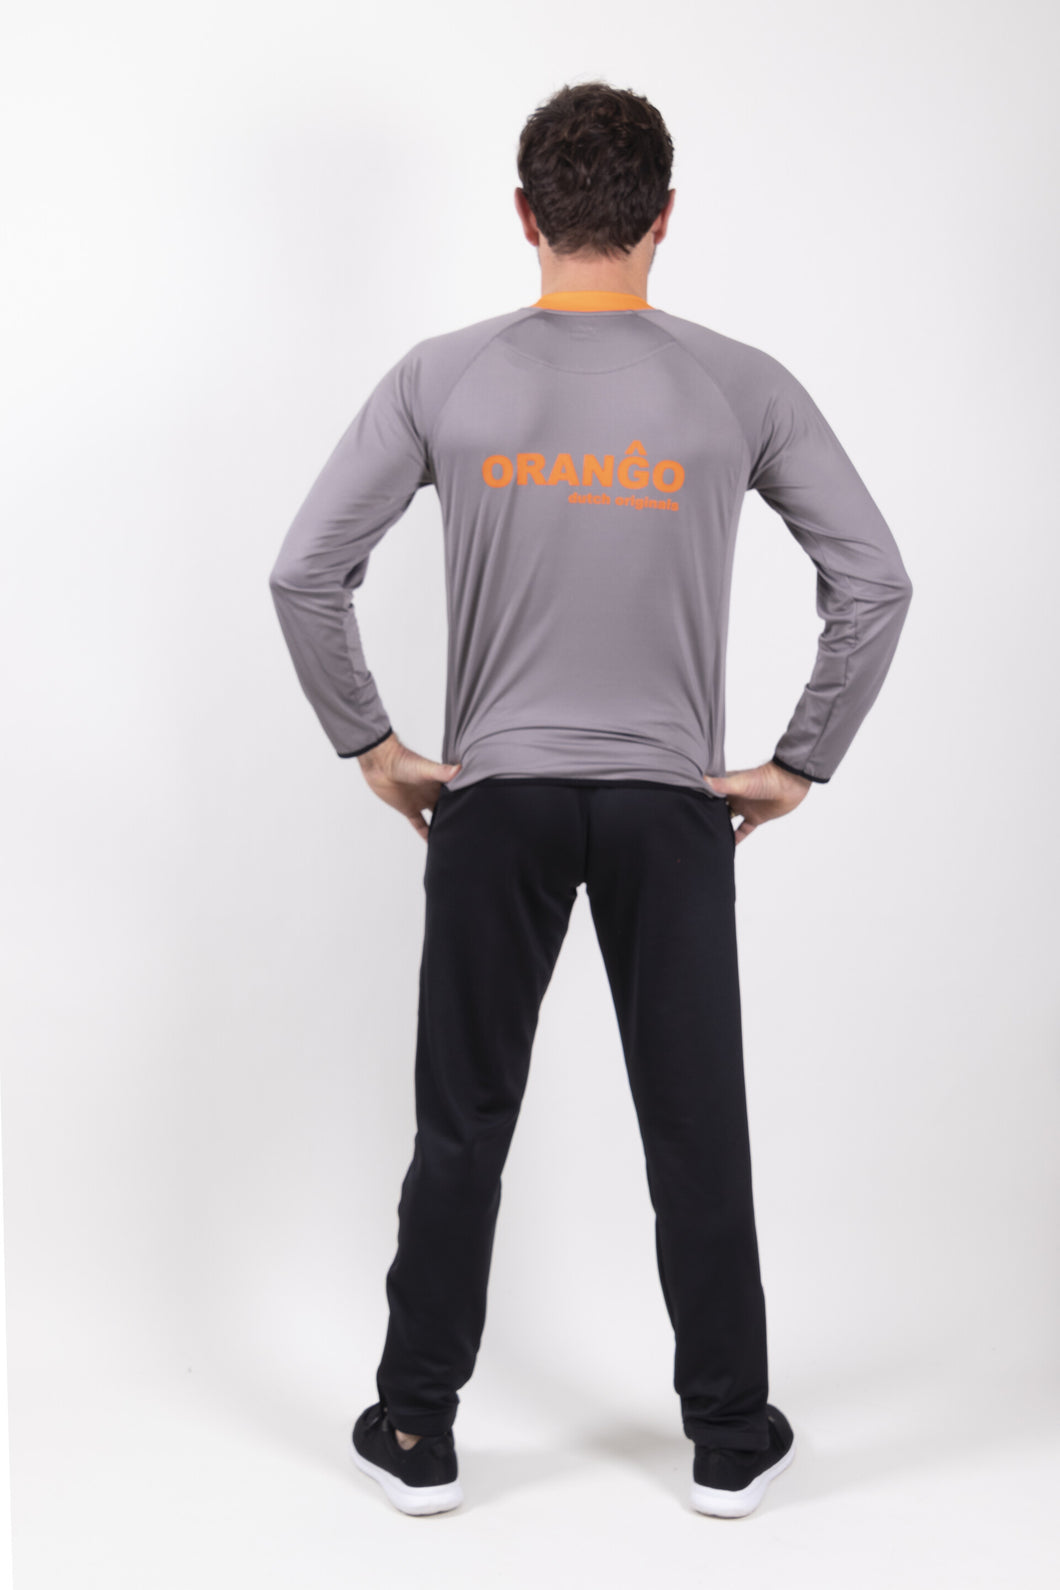 Orango Running - Mens T-shirt long sleeve -  Regular Fit - Steel Grey - P010106G